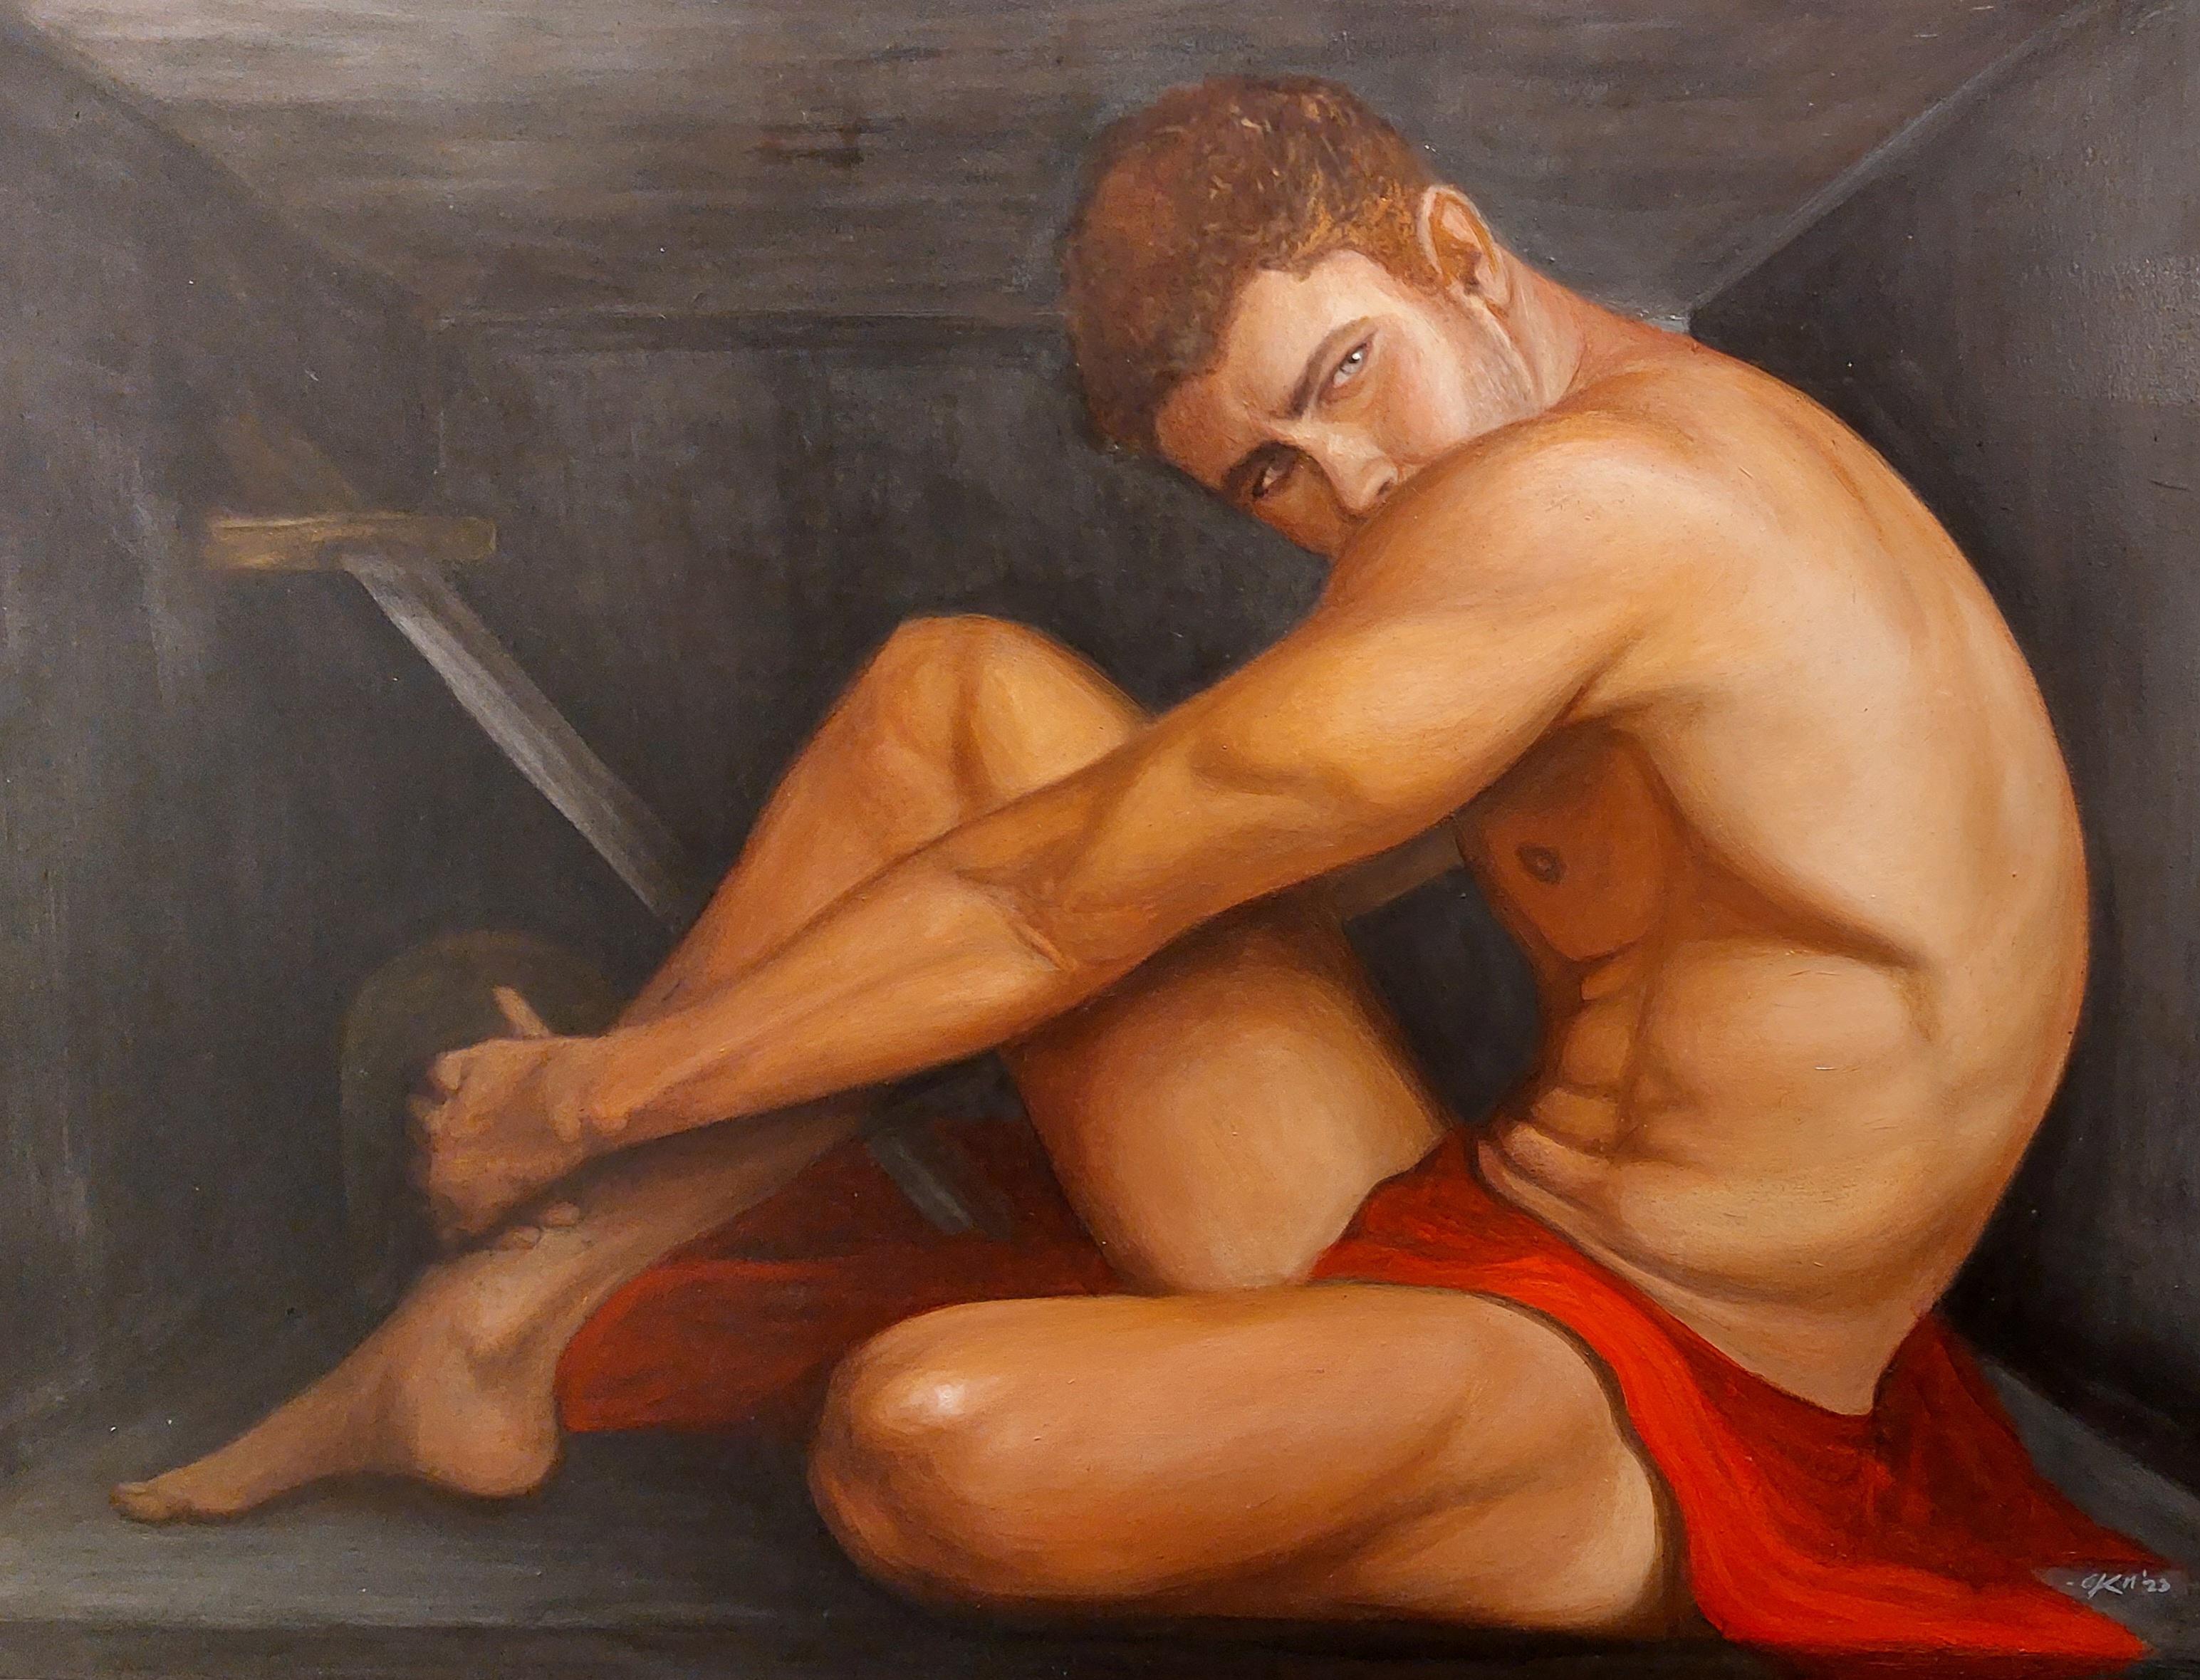 GLADIADOR, oil on canvas, 80 cm x 110 cm